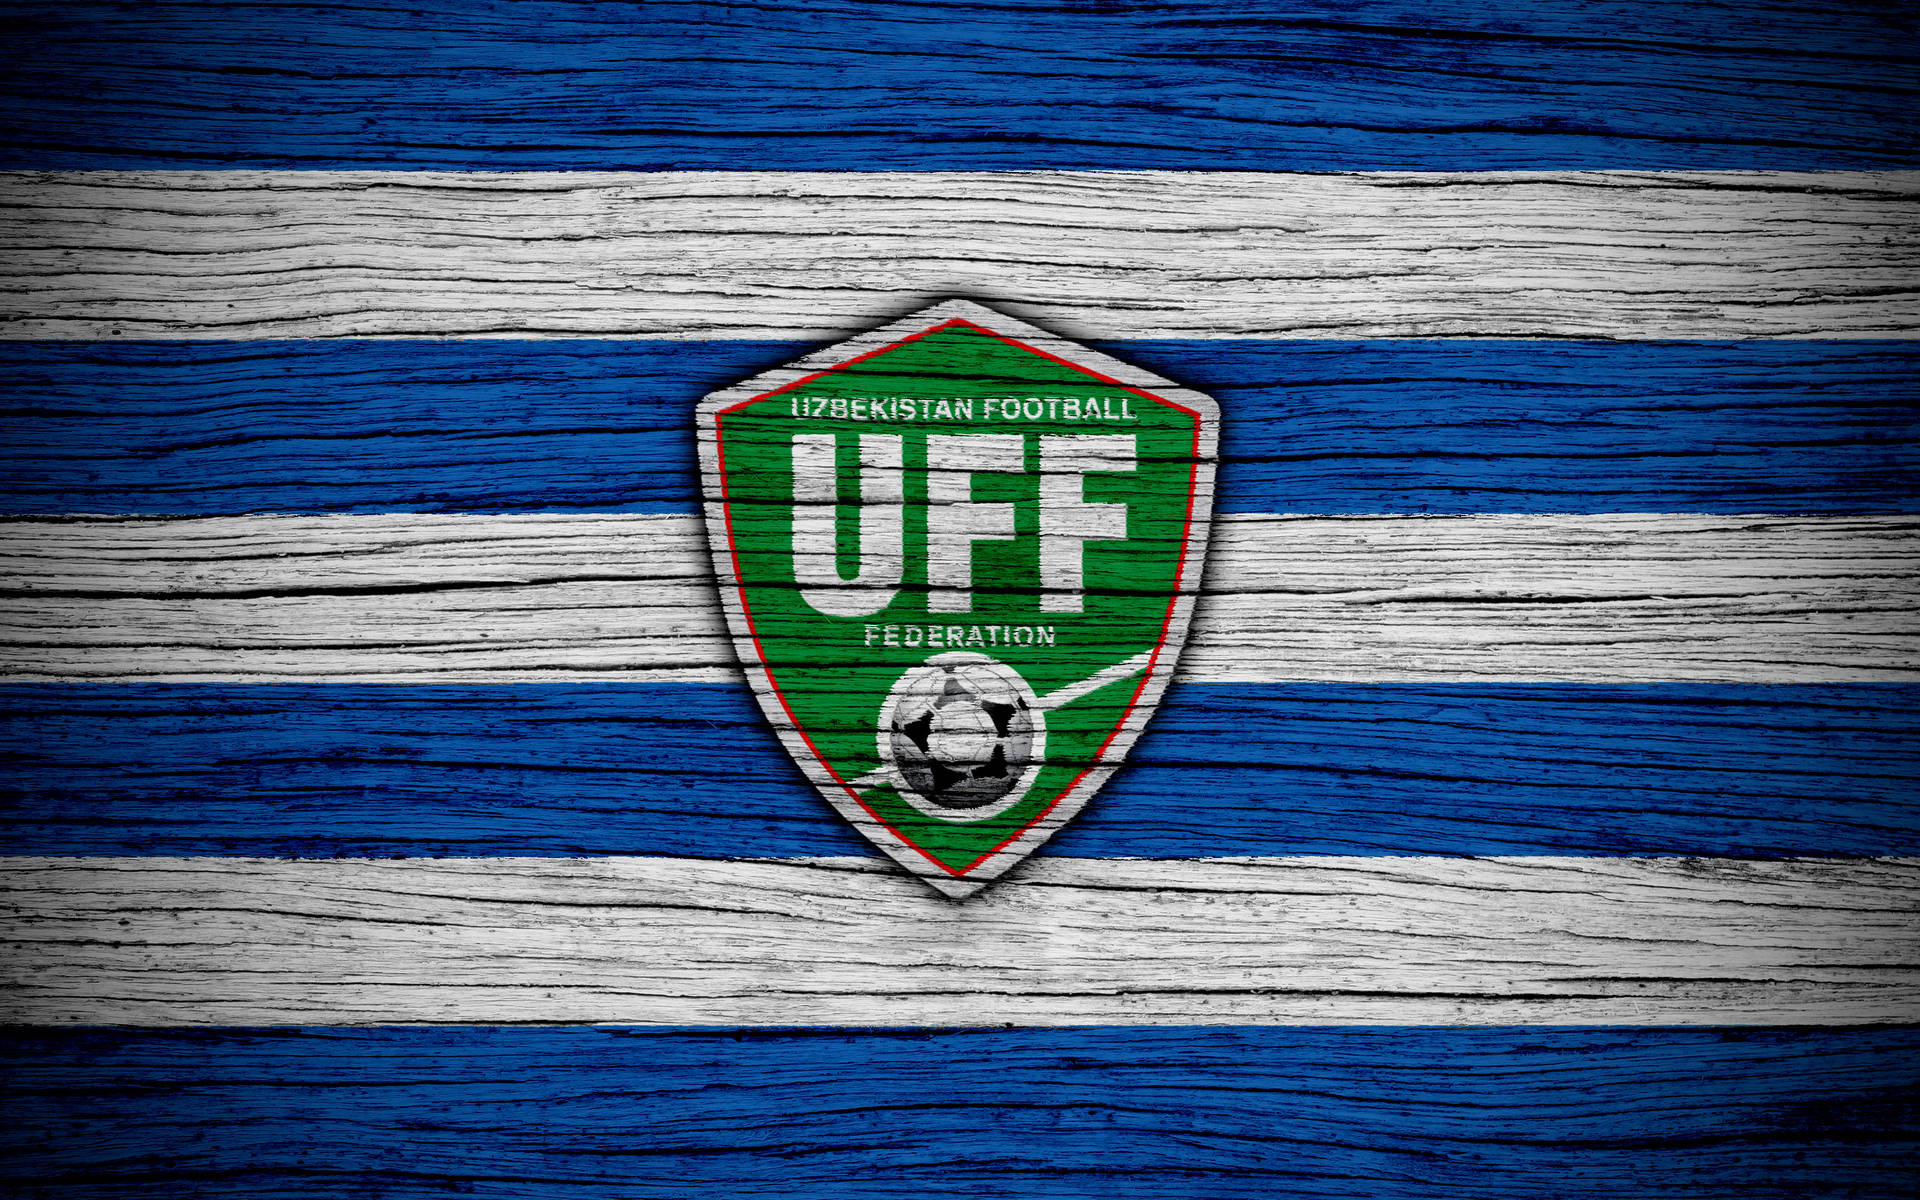 Uzbekistan Football Logo In Wooden Texture Background